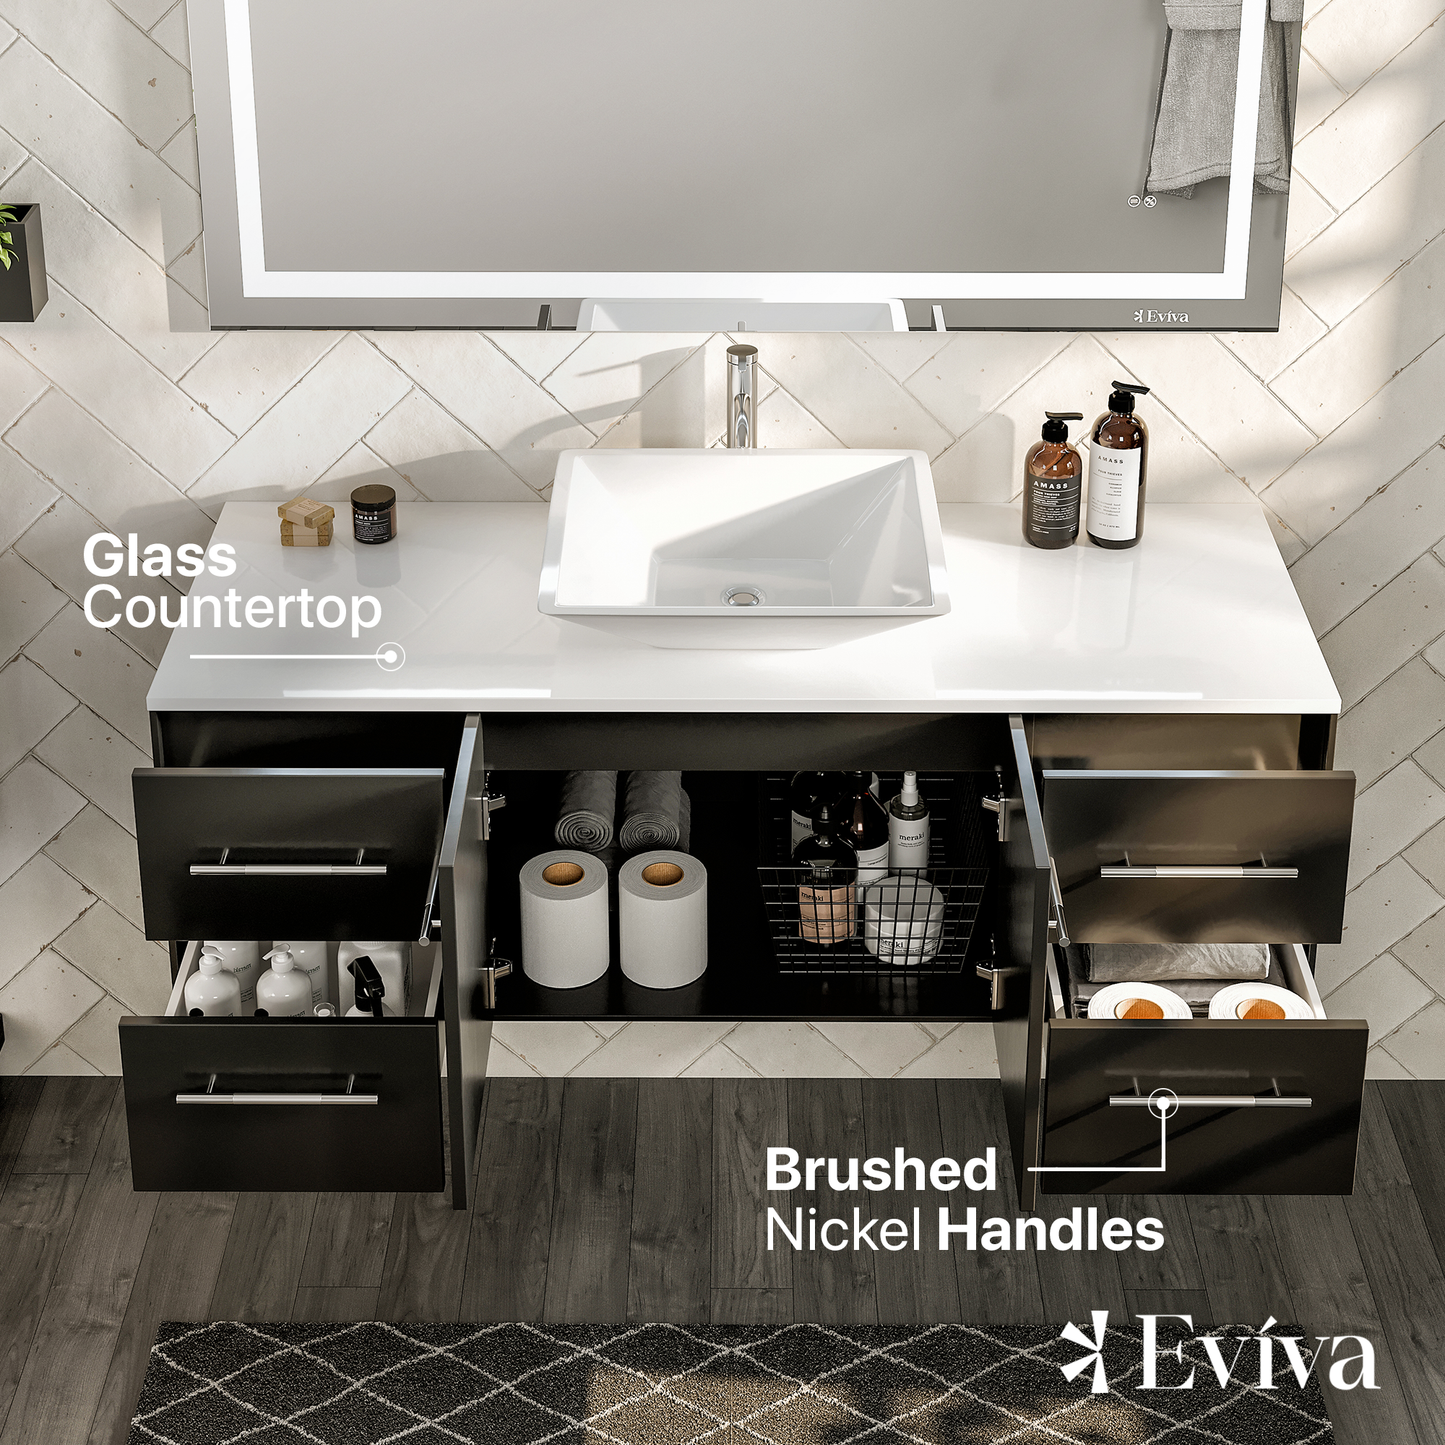 Wave 48"W x 22"D Espresso Bathroom Vanity with White Quartz Countertop and Vessel Porcelain Sink